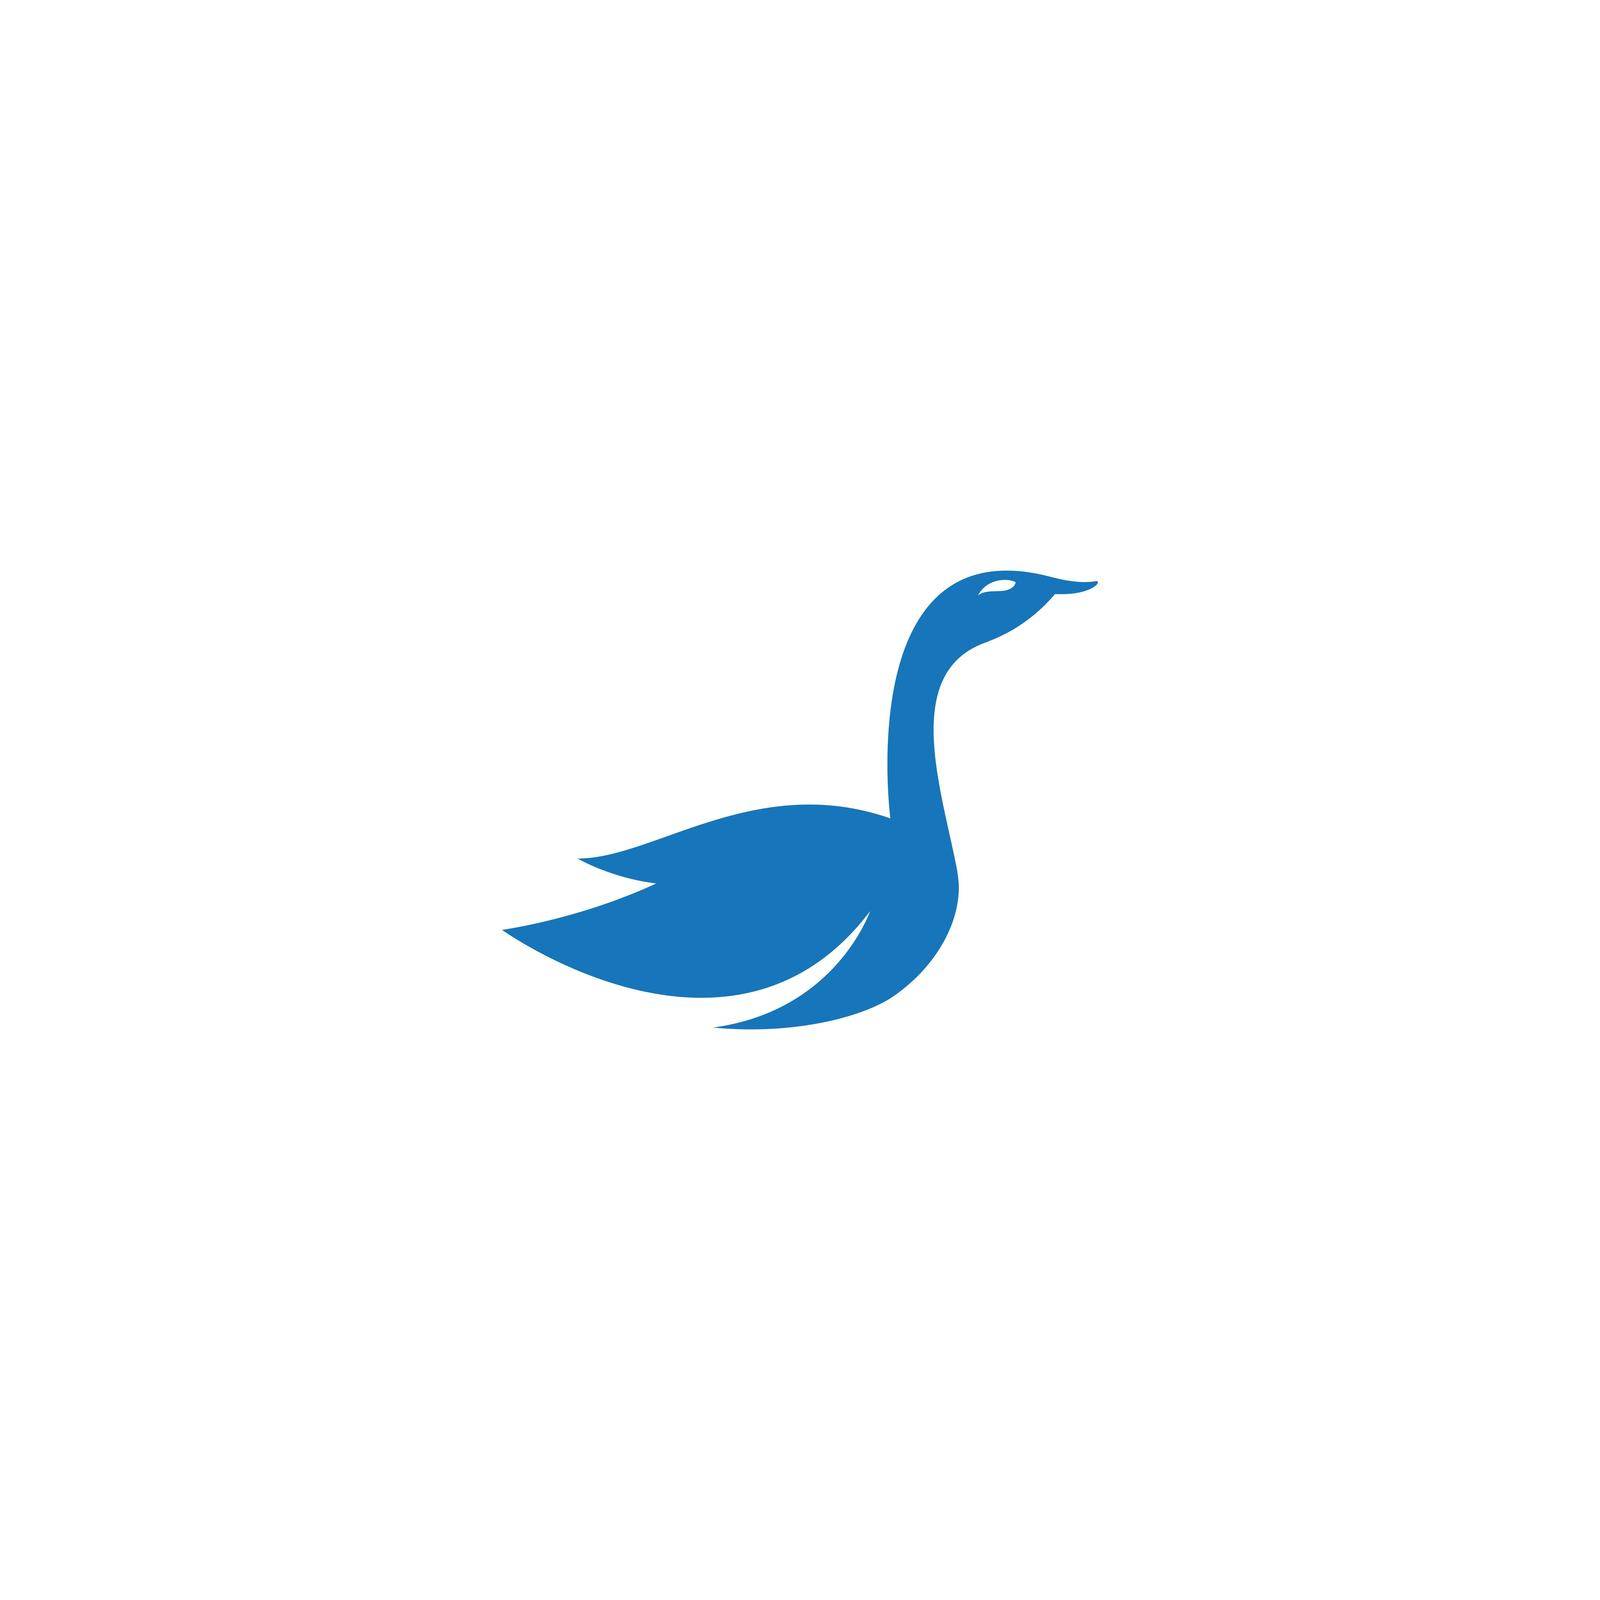 Swan logo by awk